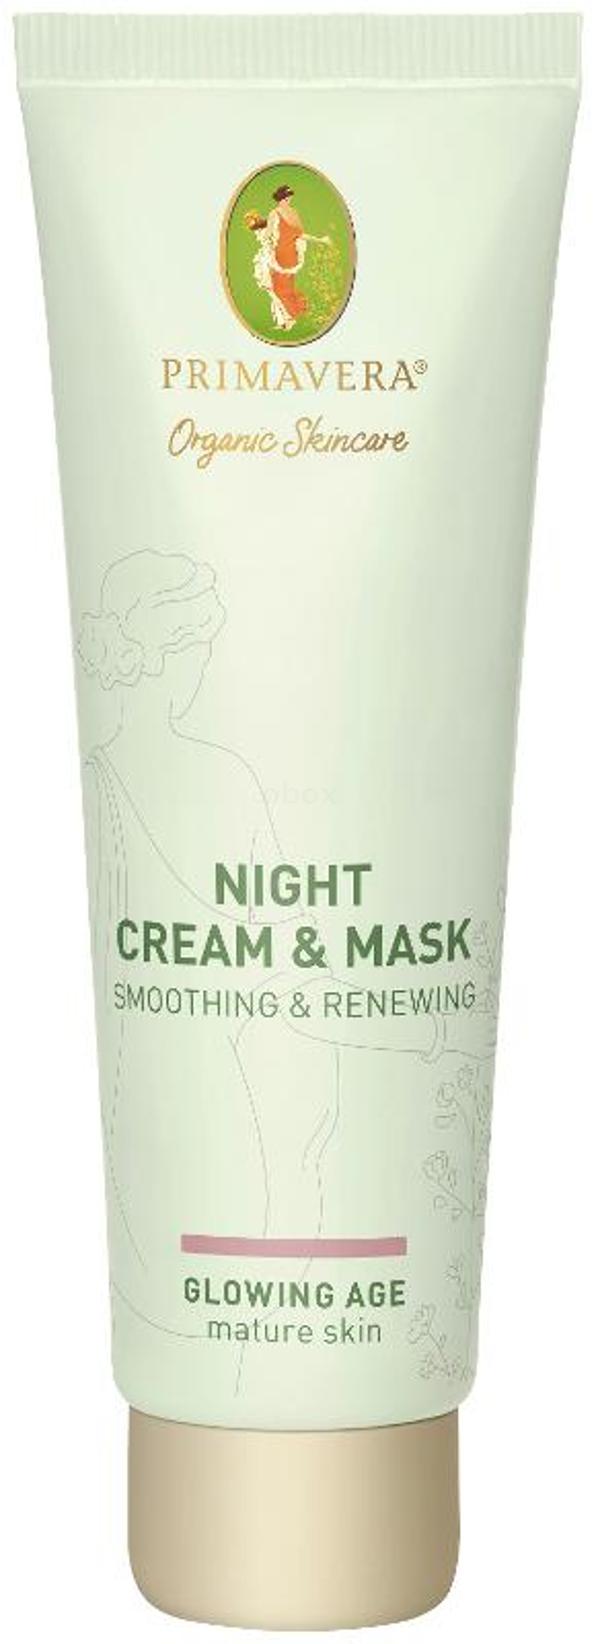 Produktfoto zu Night Cream & Mask - Smoothing & Renewing, 50 ml